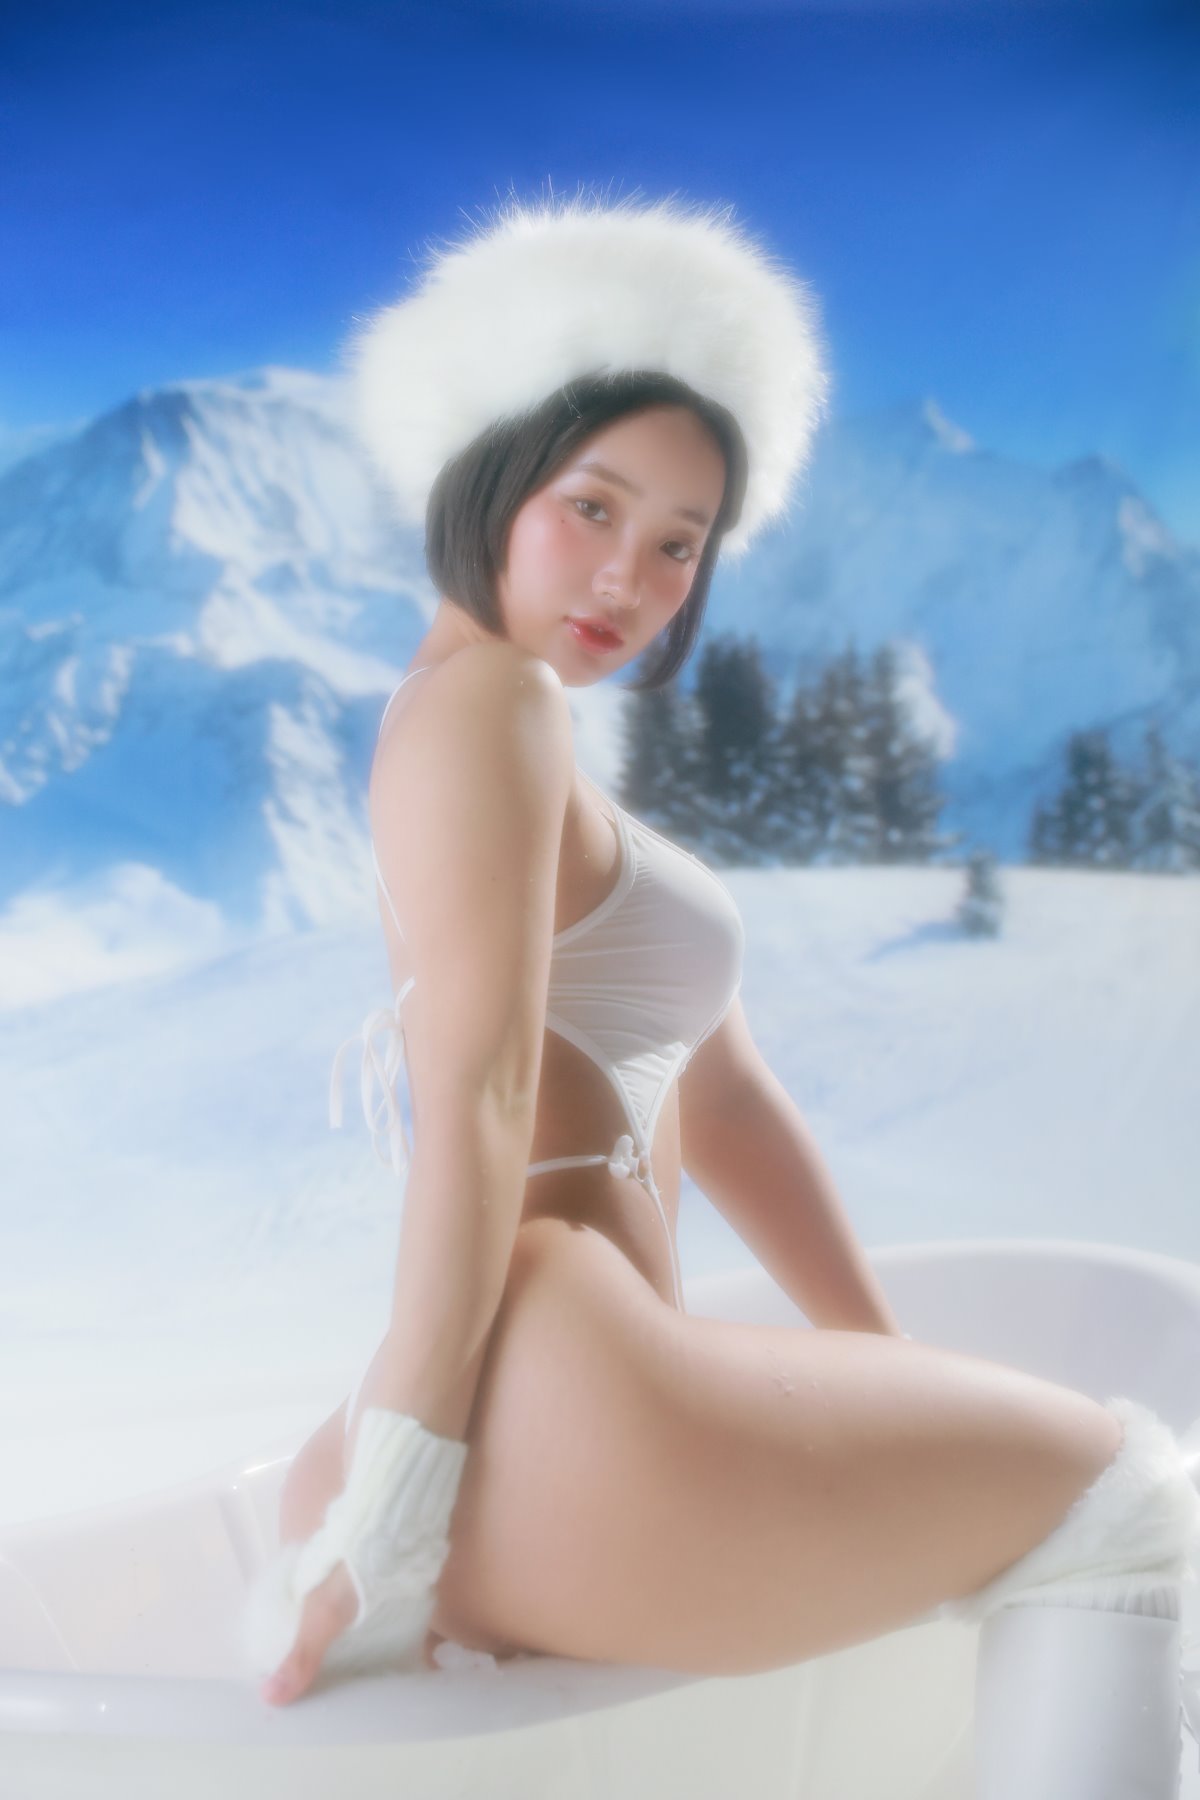 Pinkpie Booty Queen Vol 1 The Hot Body Of A Lost Girl In Snow Garden 0047 9141915674.jpg